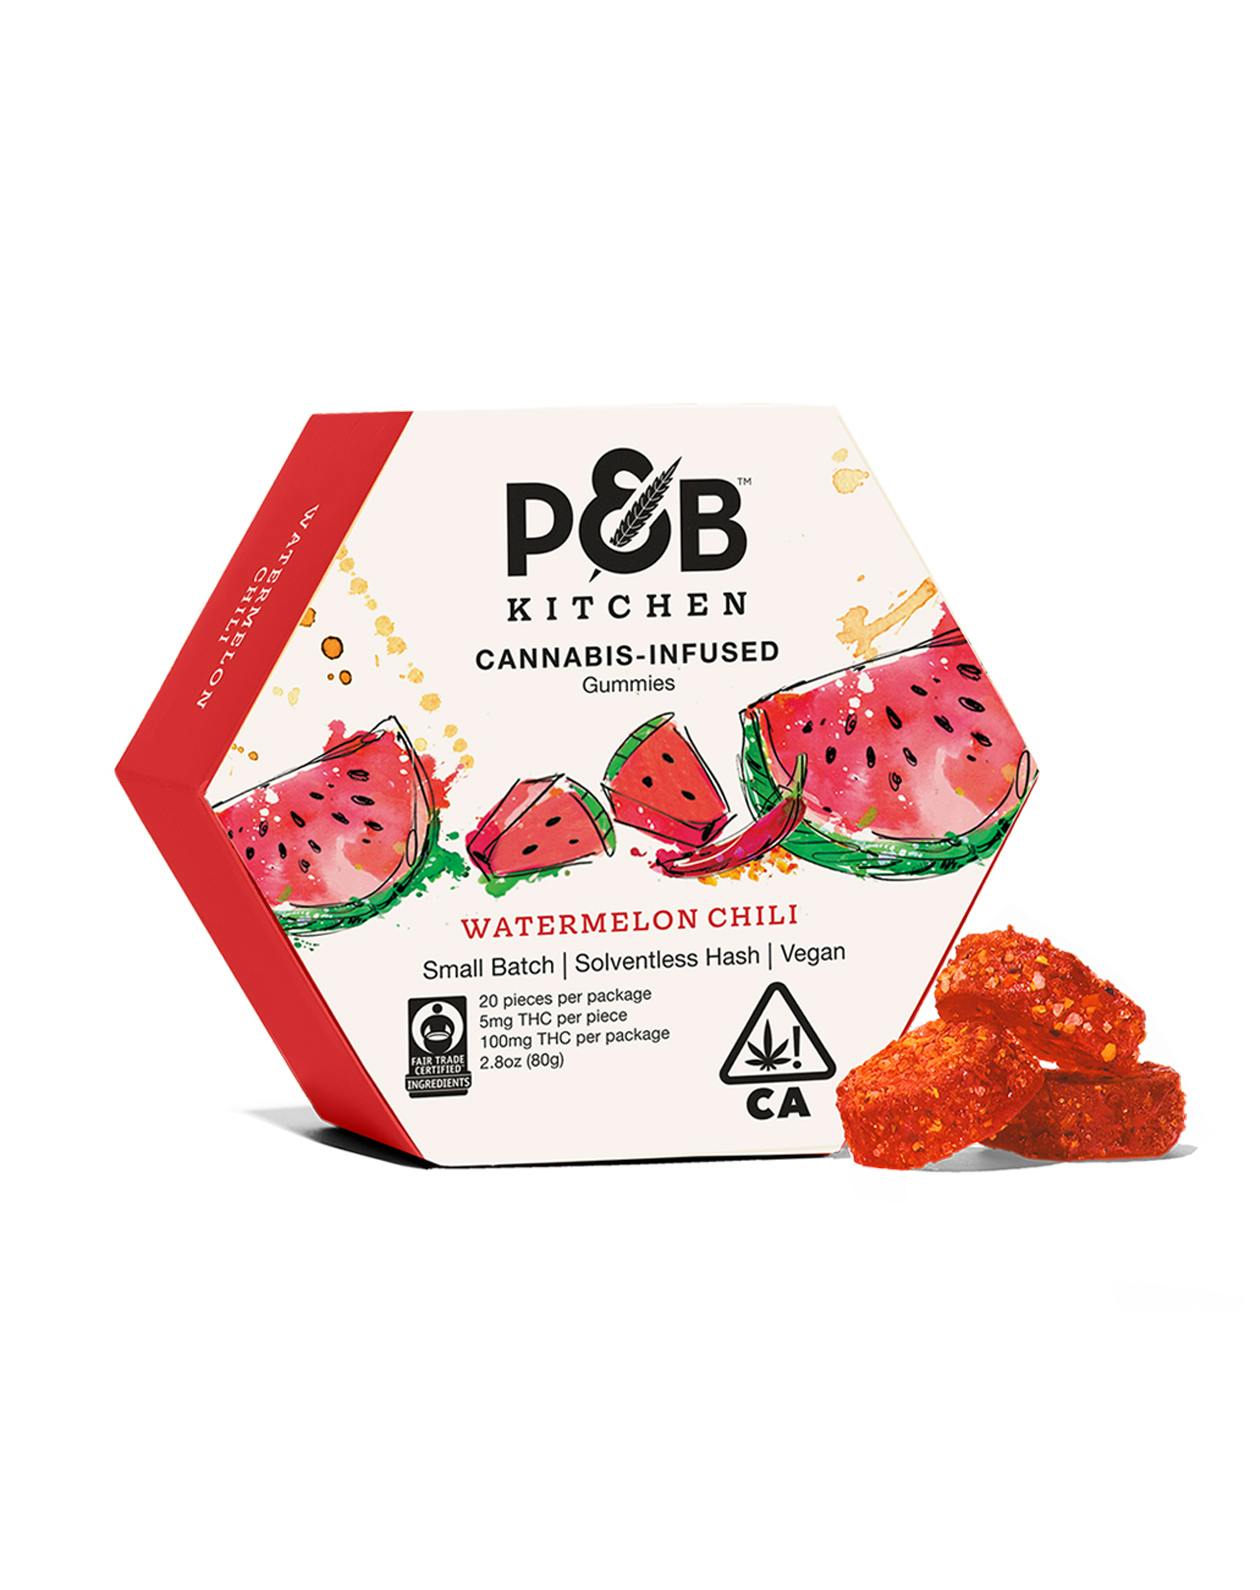 PB Kitchen Gummies Watermelon Chili 01 PDP